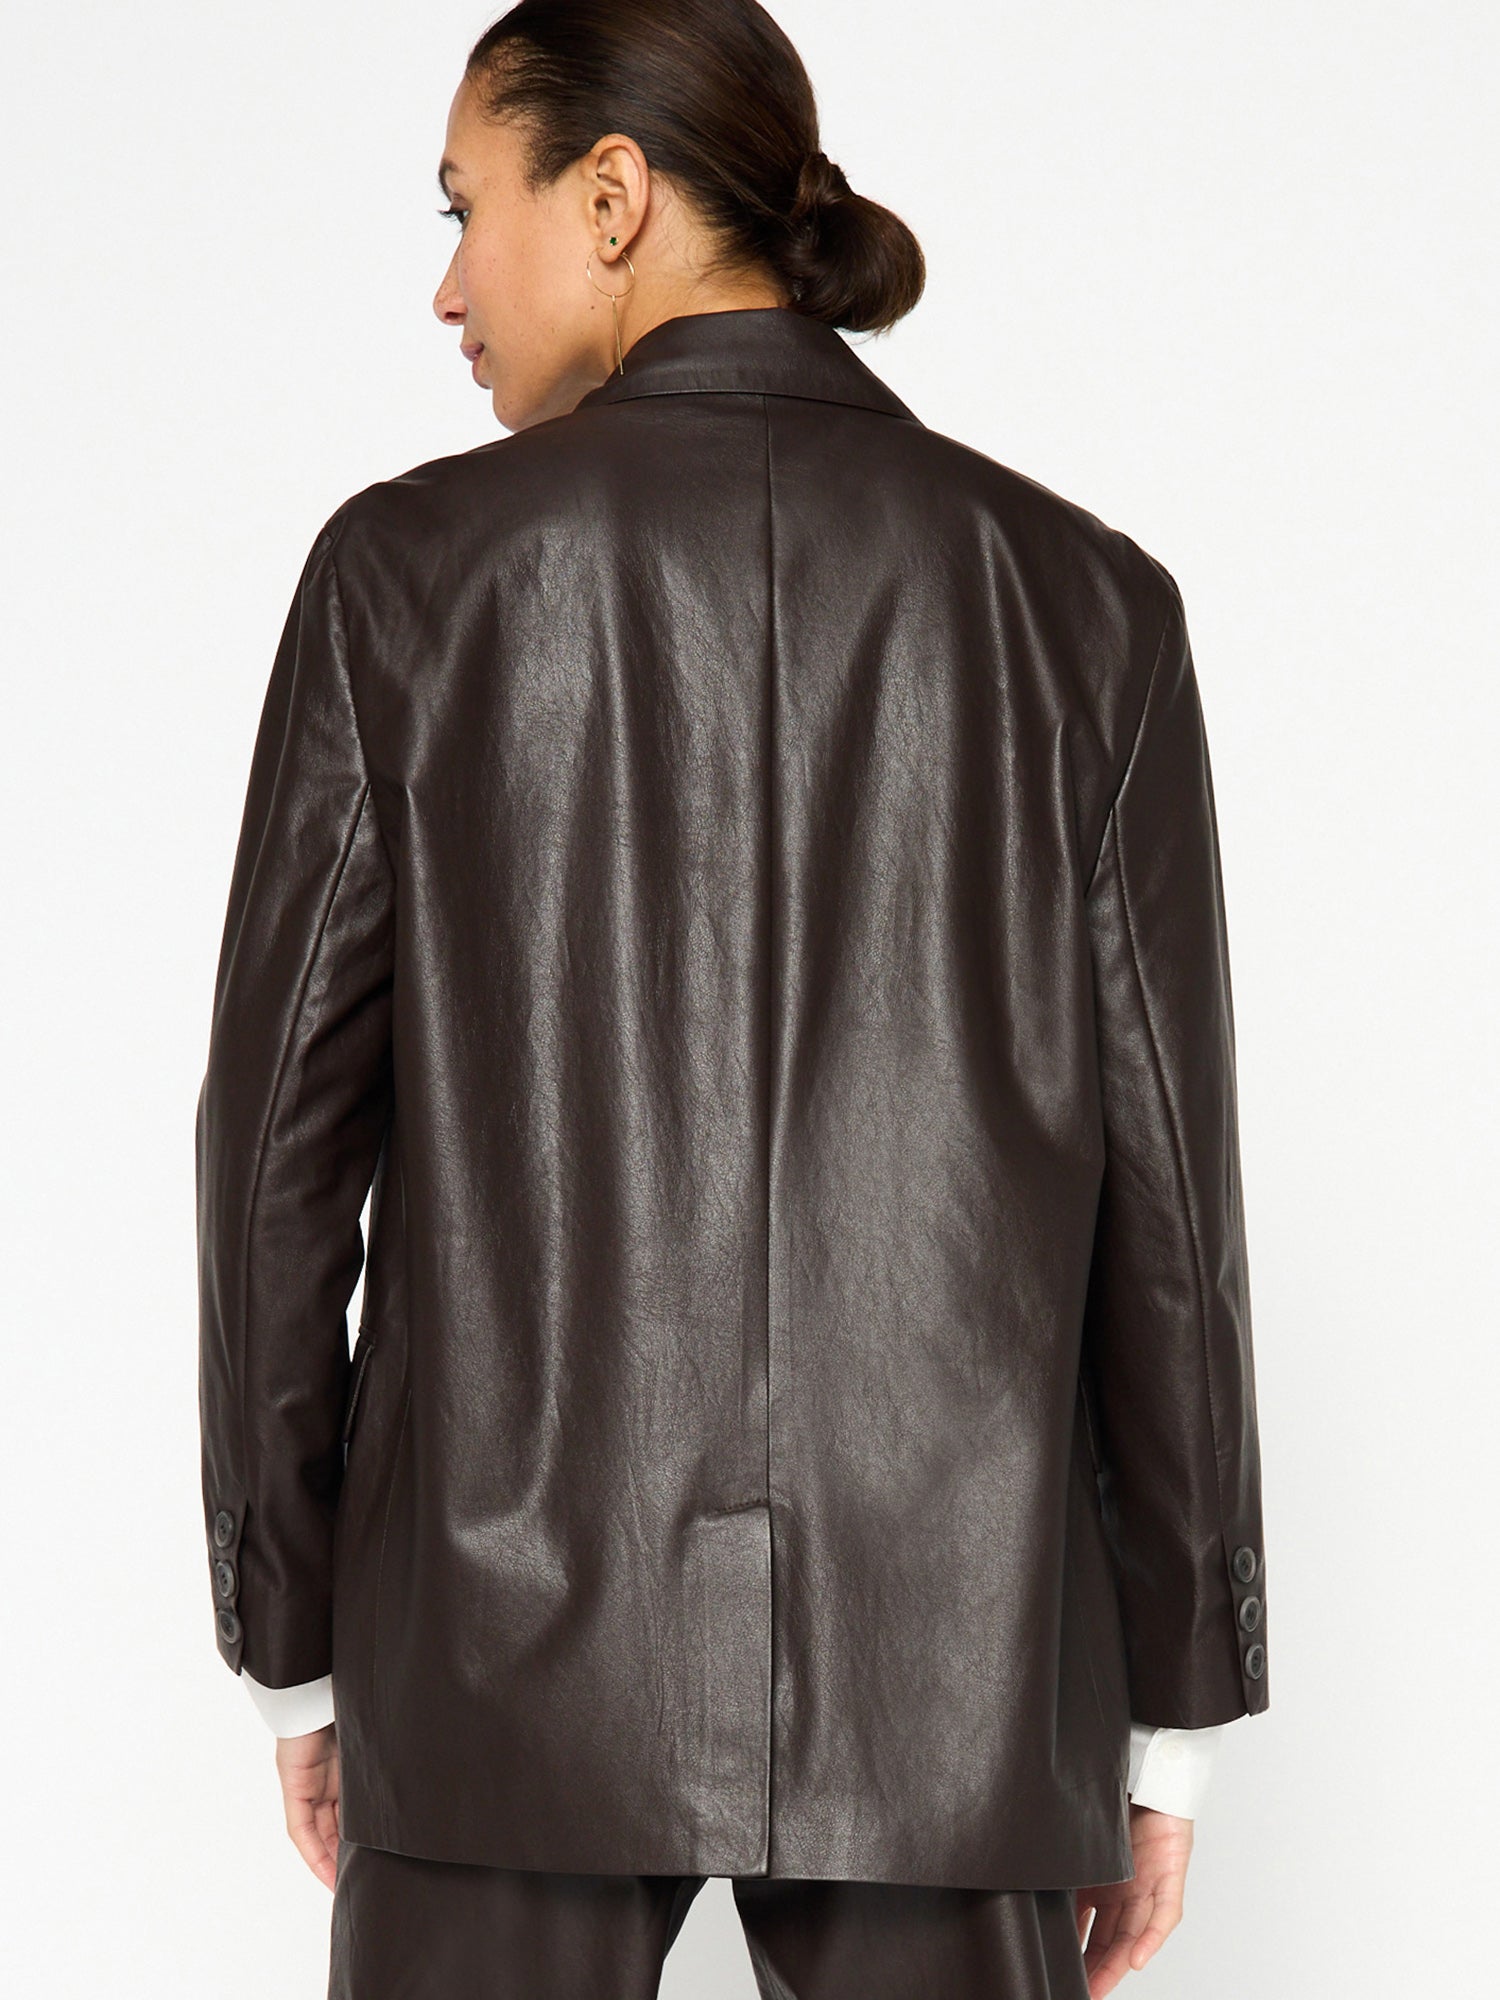 Farley brown vegan leather blazer back view